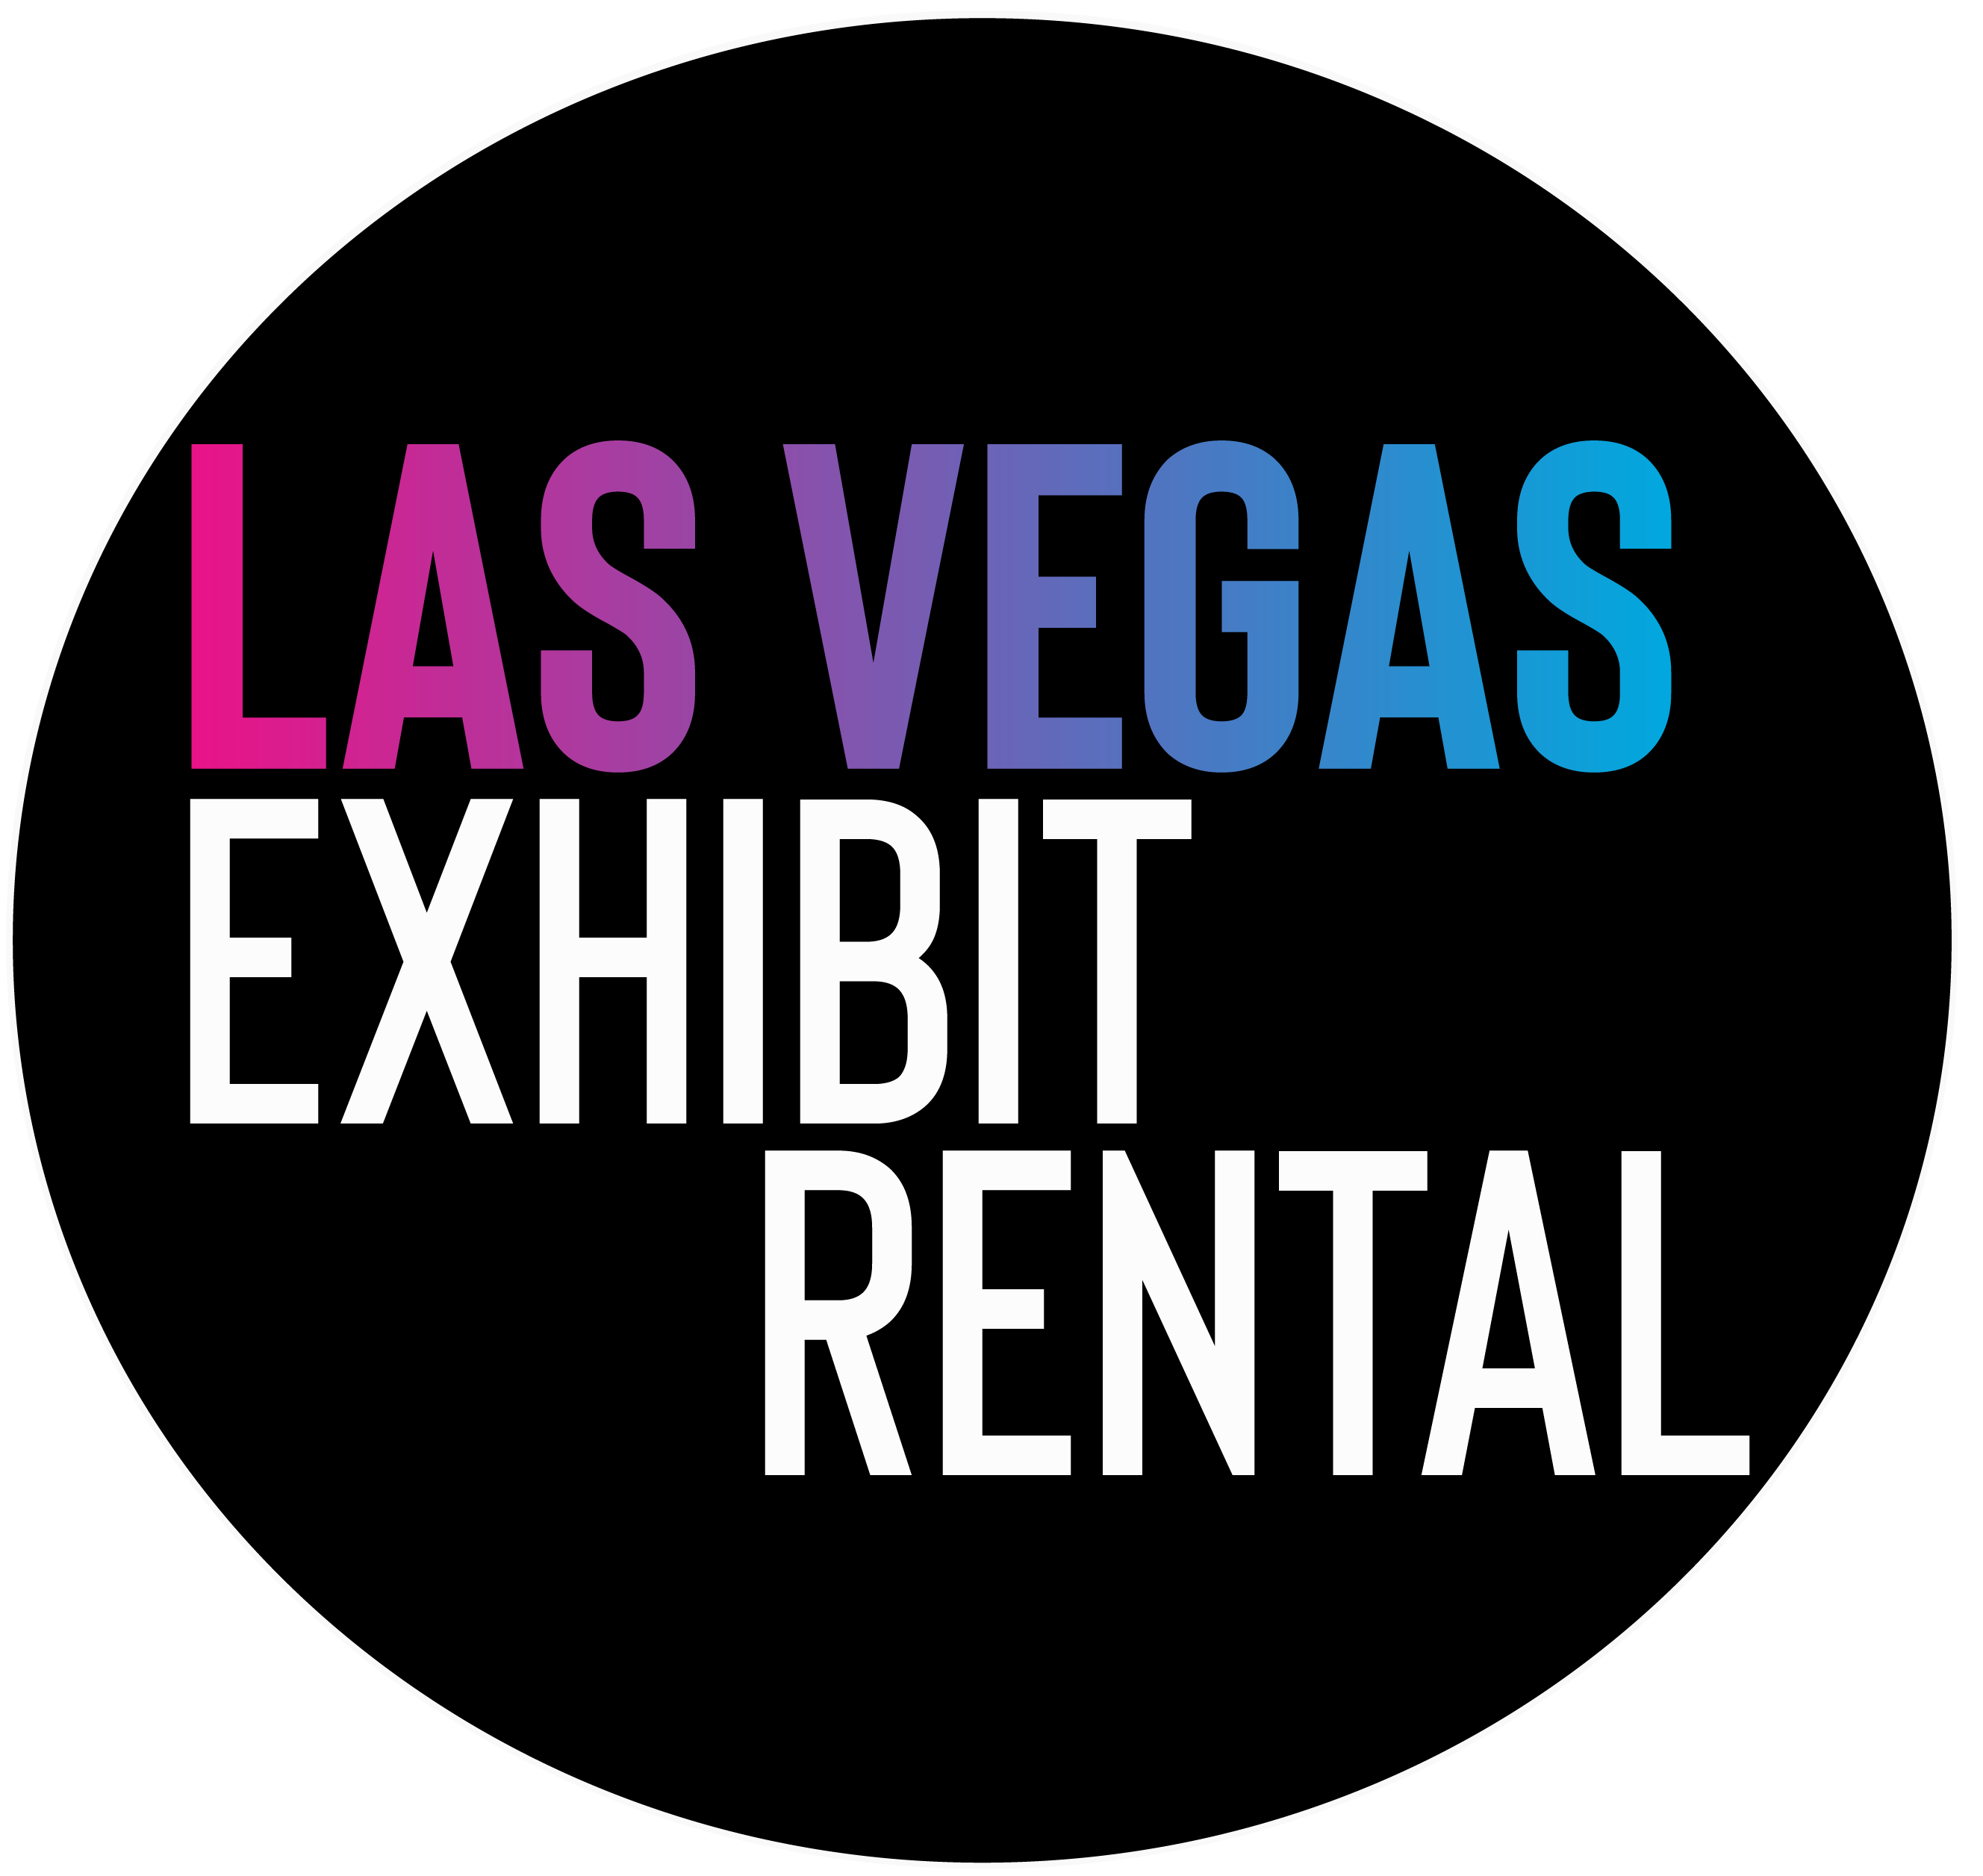 Las Vegas Exhibit Rental